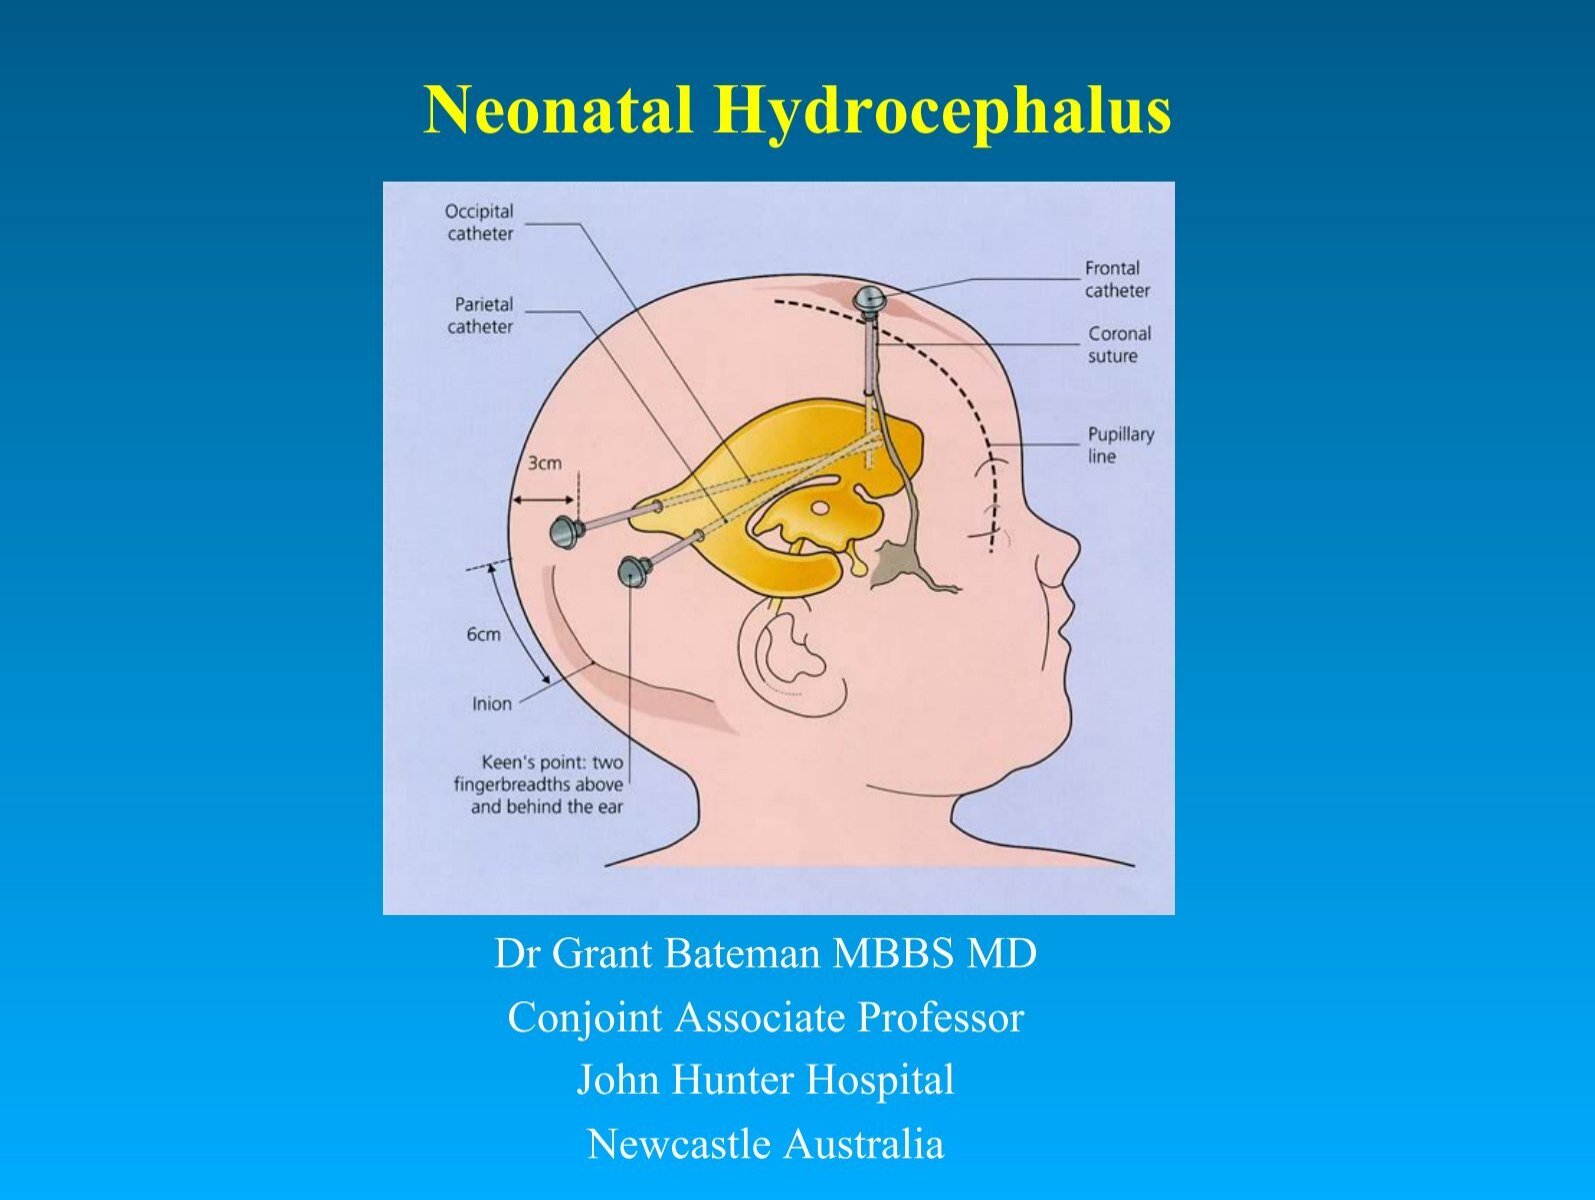 Neonatal Hydrocephalus International Hydrocephalus Imaging 9106